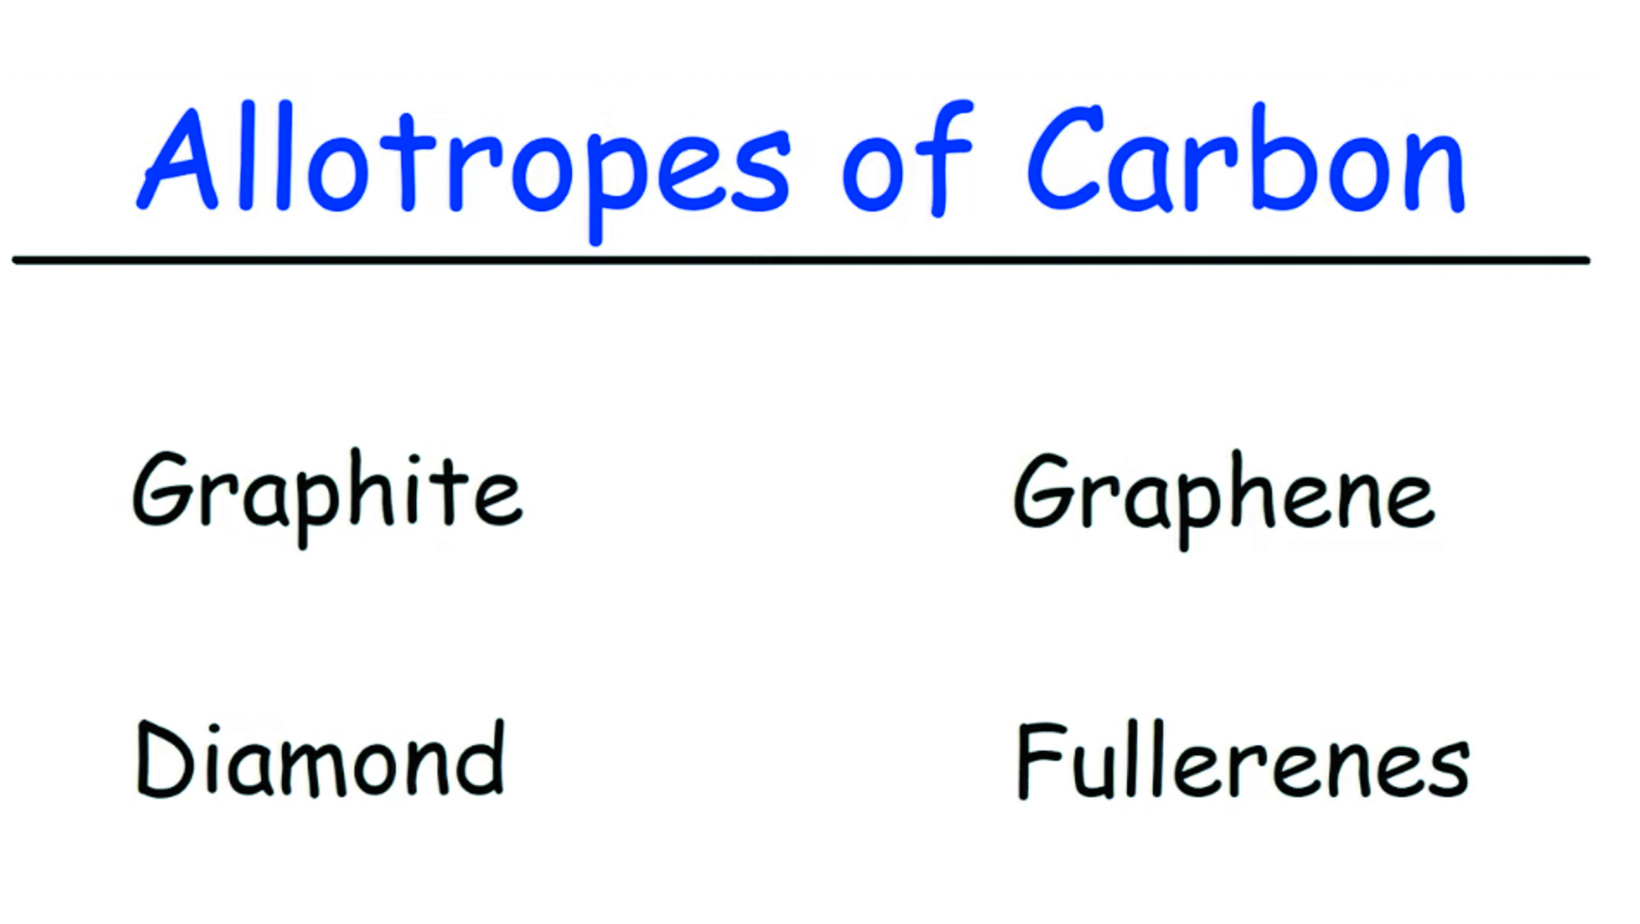 Allotropes of Carbon – Graphite, Diamond, and Graphene